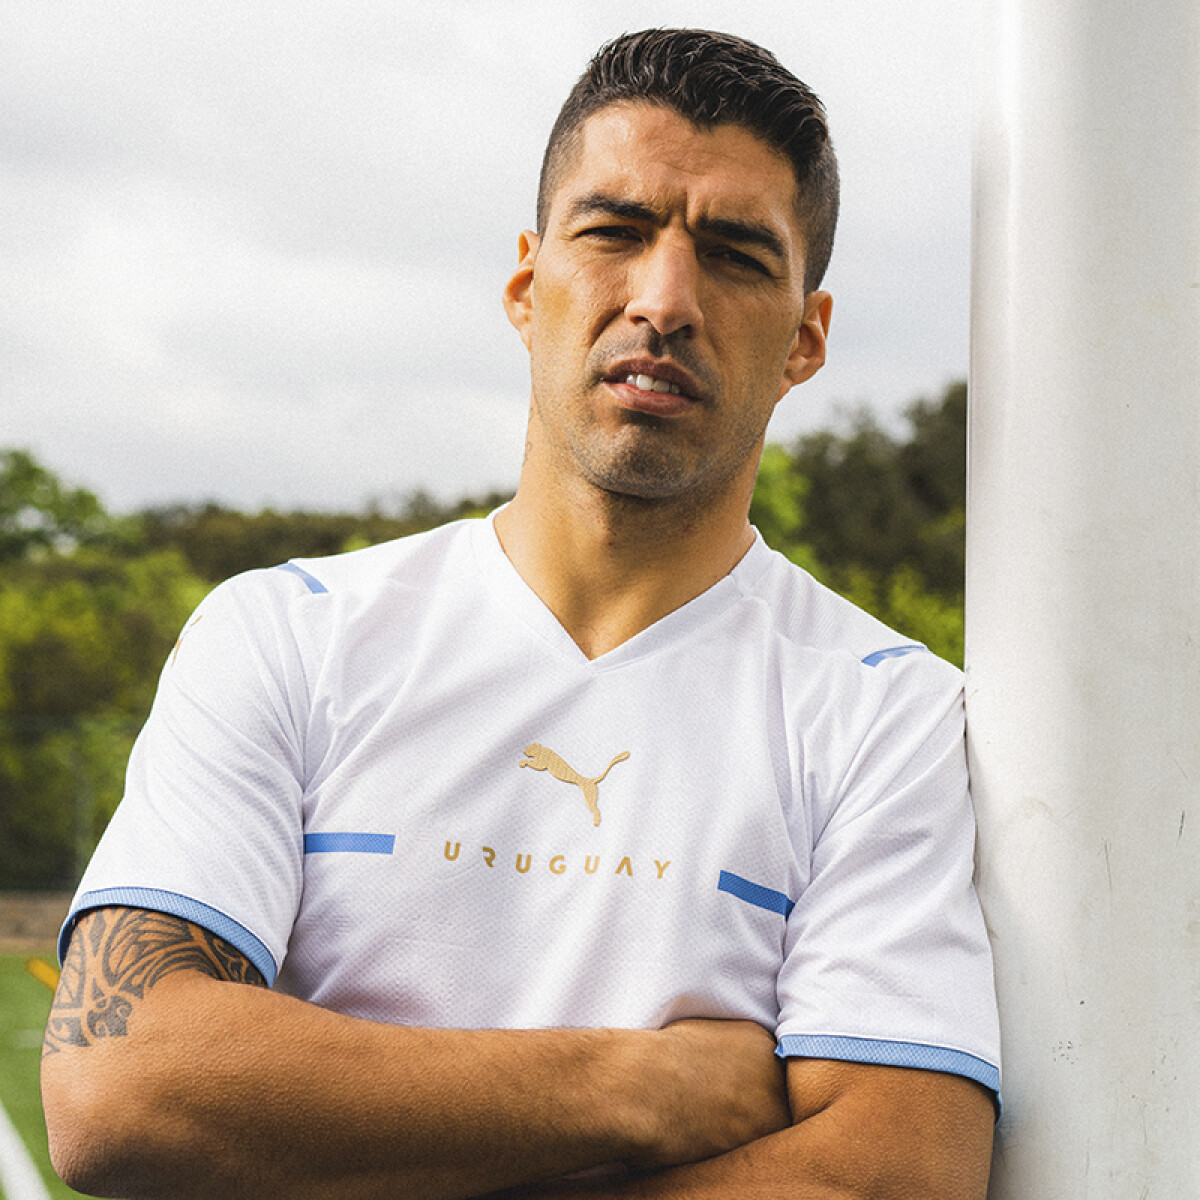 Uruguay Away shirt 21-70521001 - Blanco 